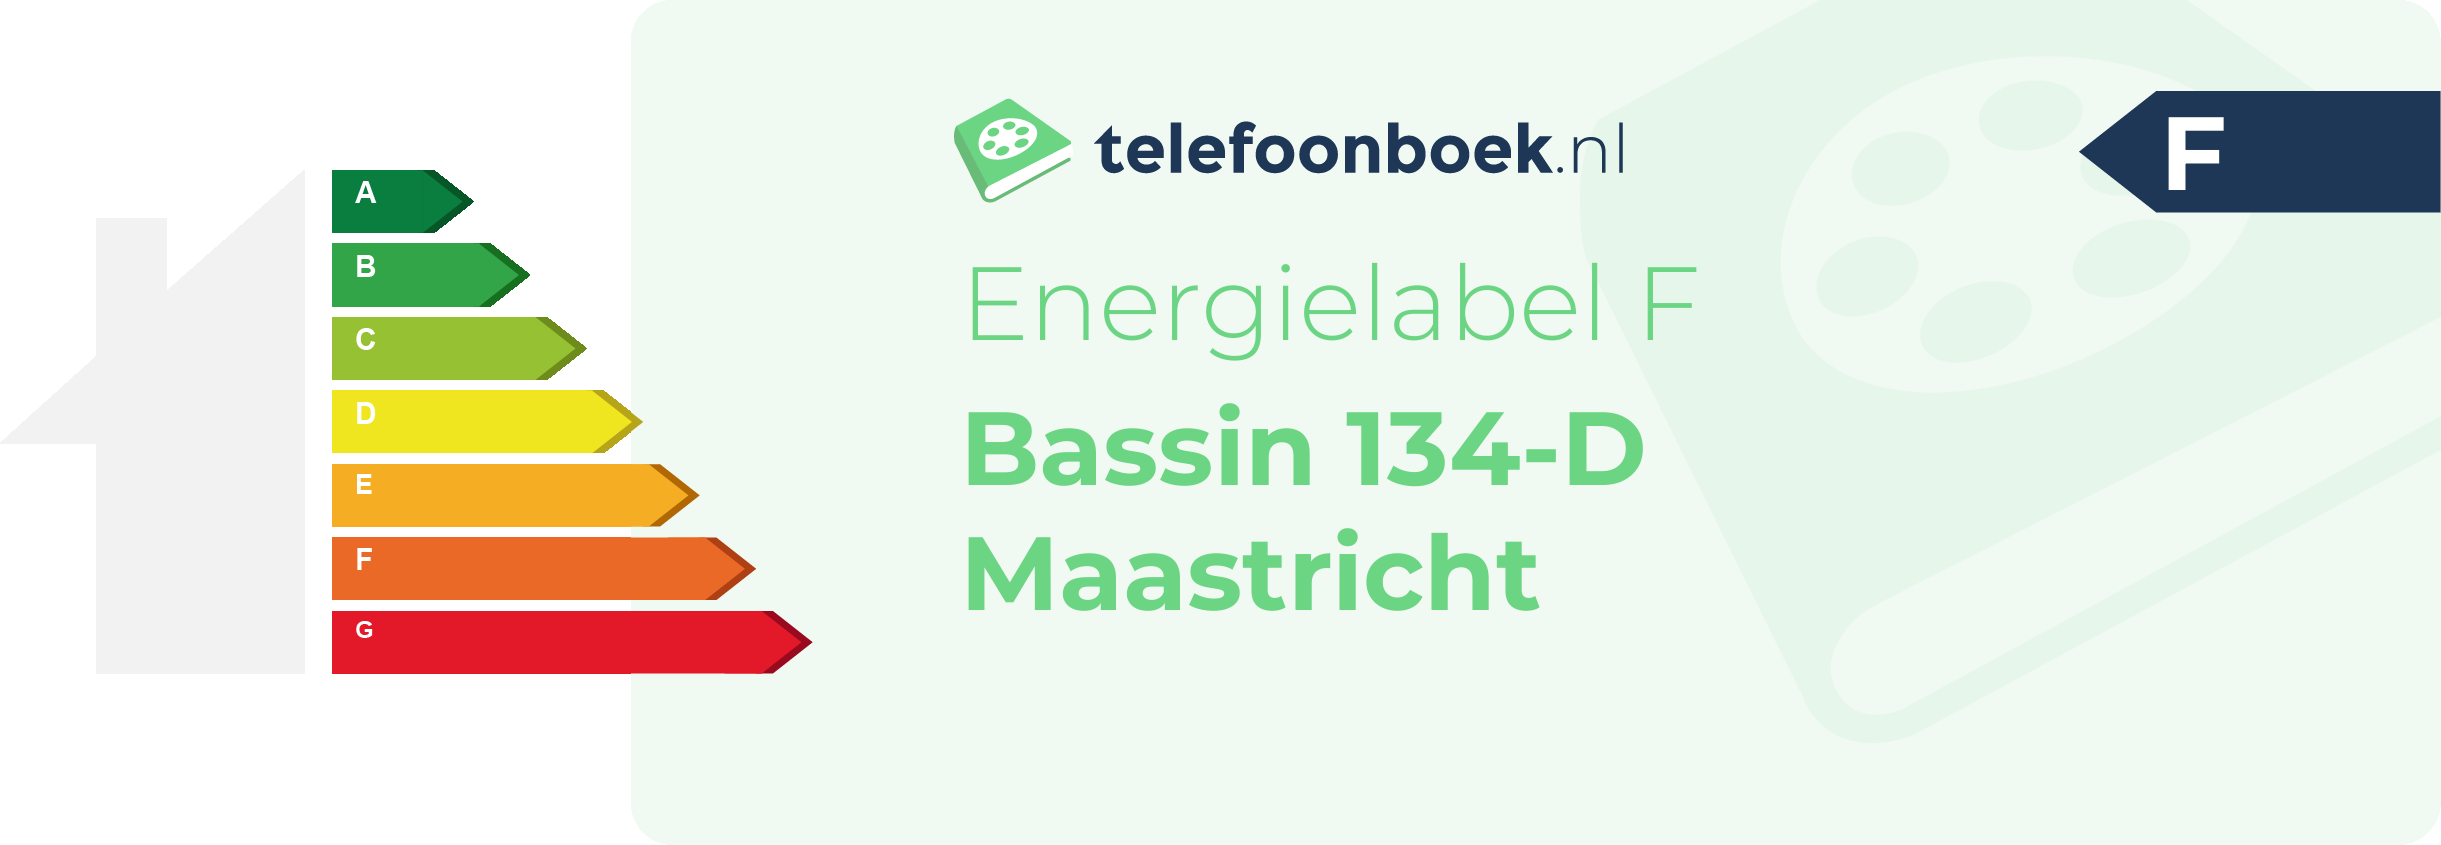 Energielabel Bassin 134-D Maastricht